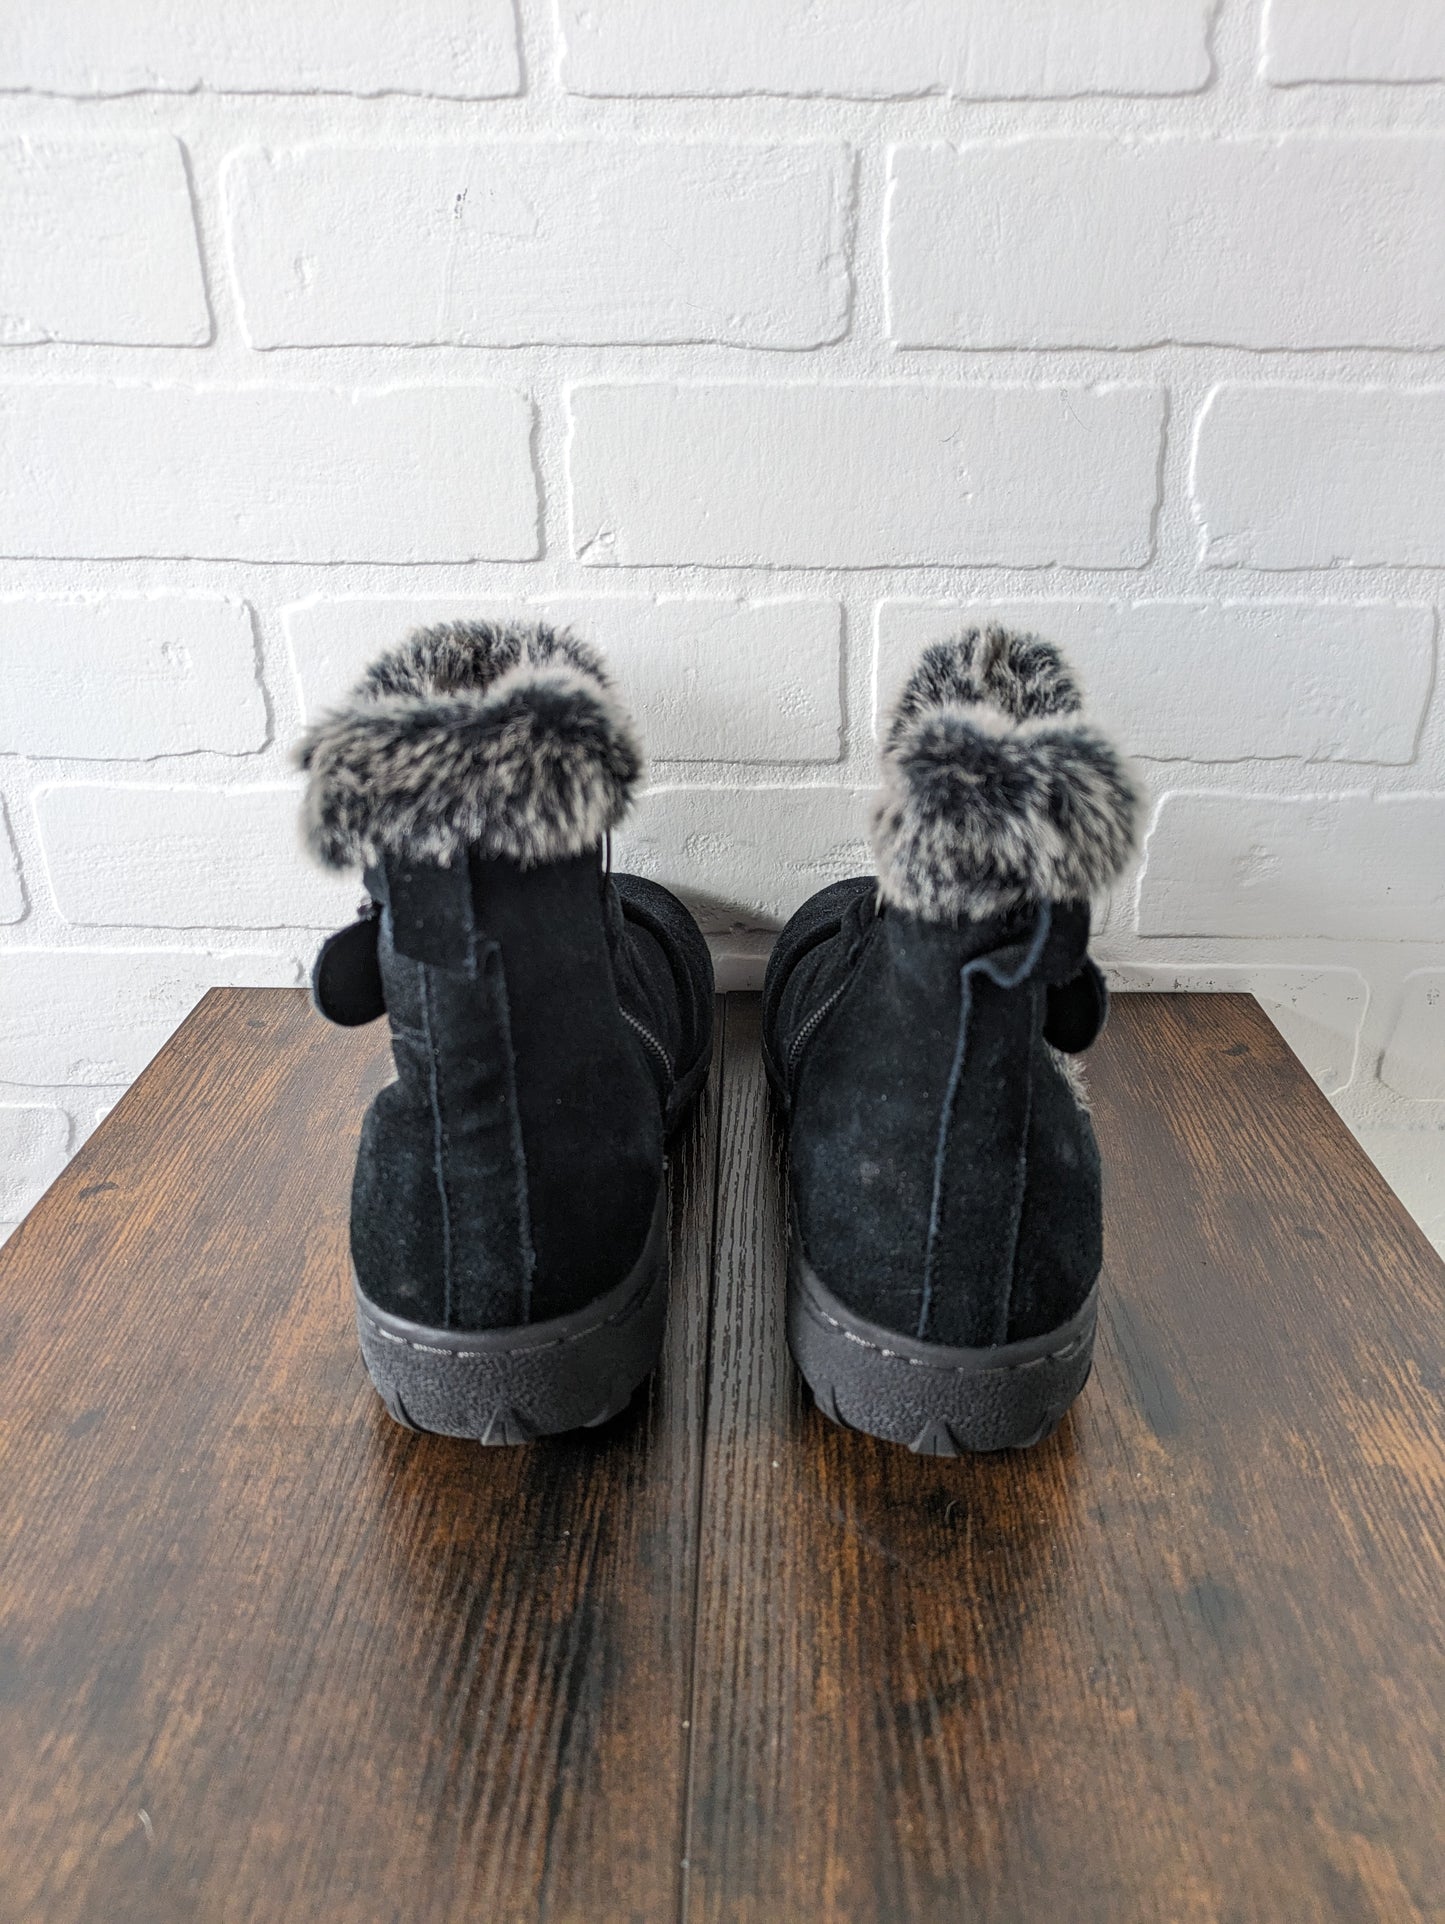 Boots Snow By Khombu  Size: 7